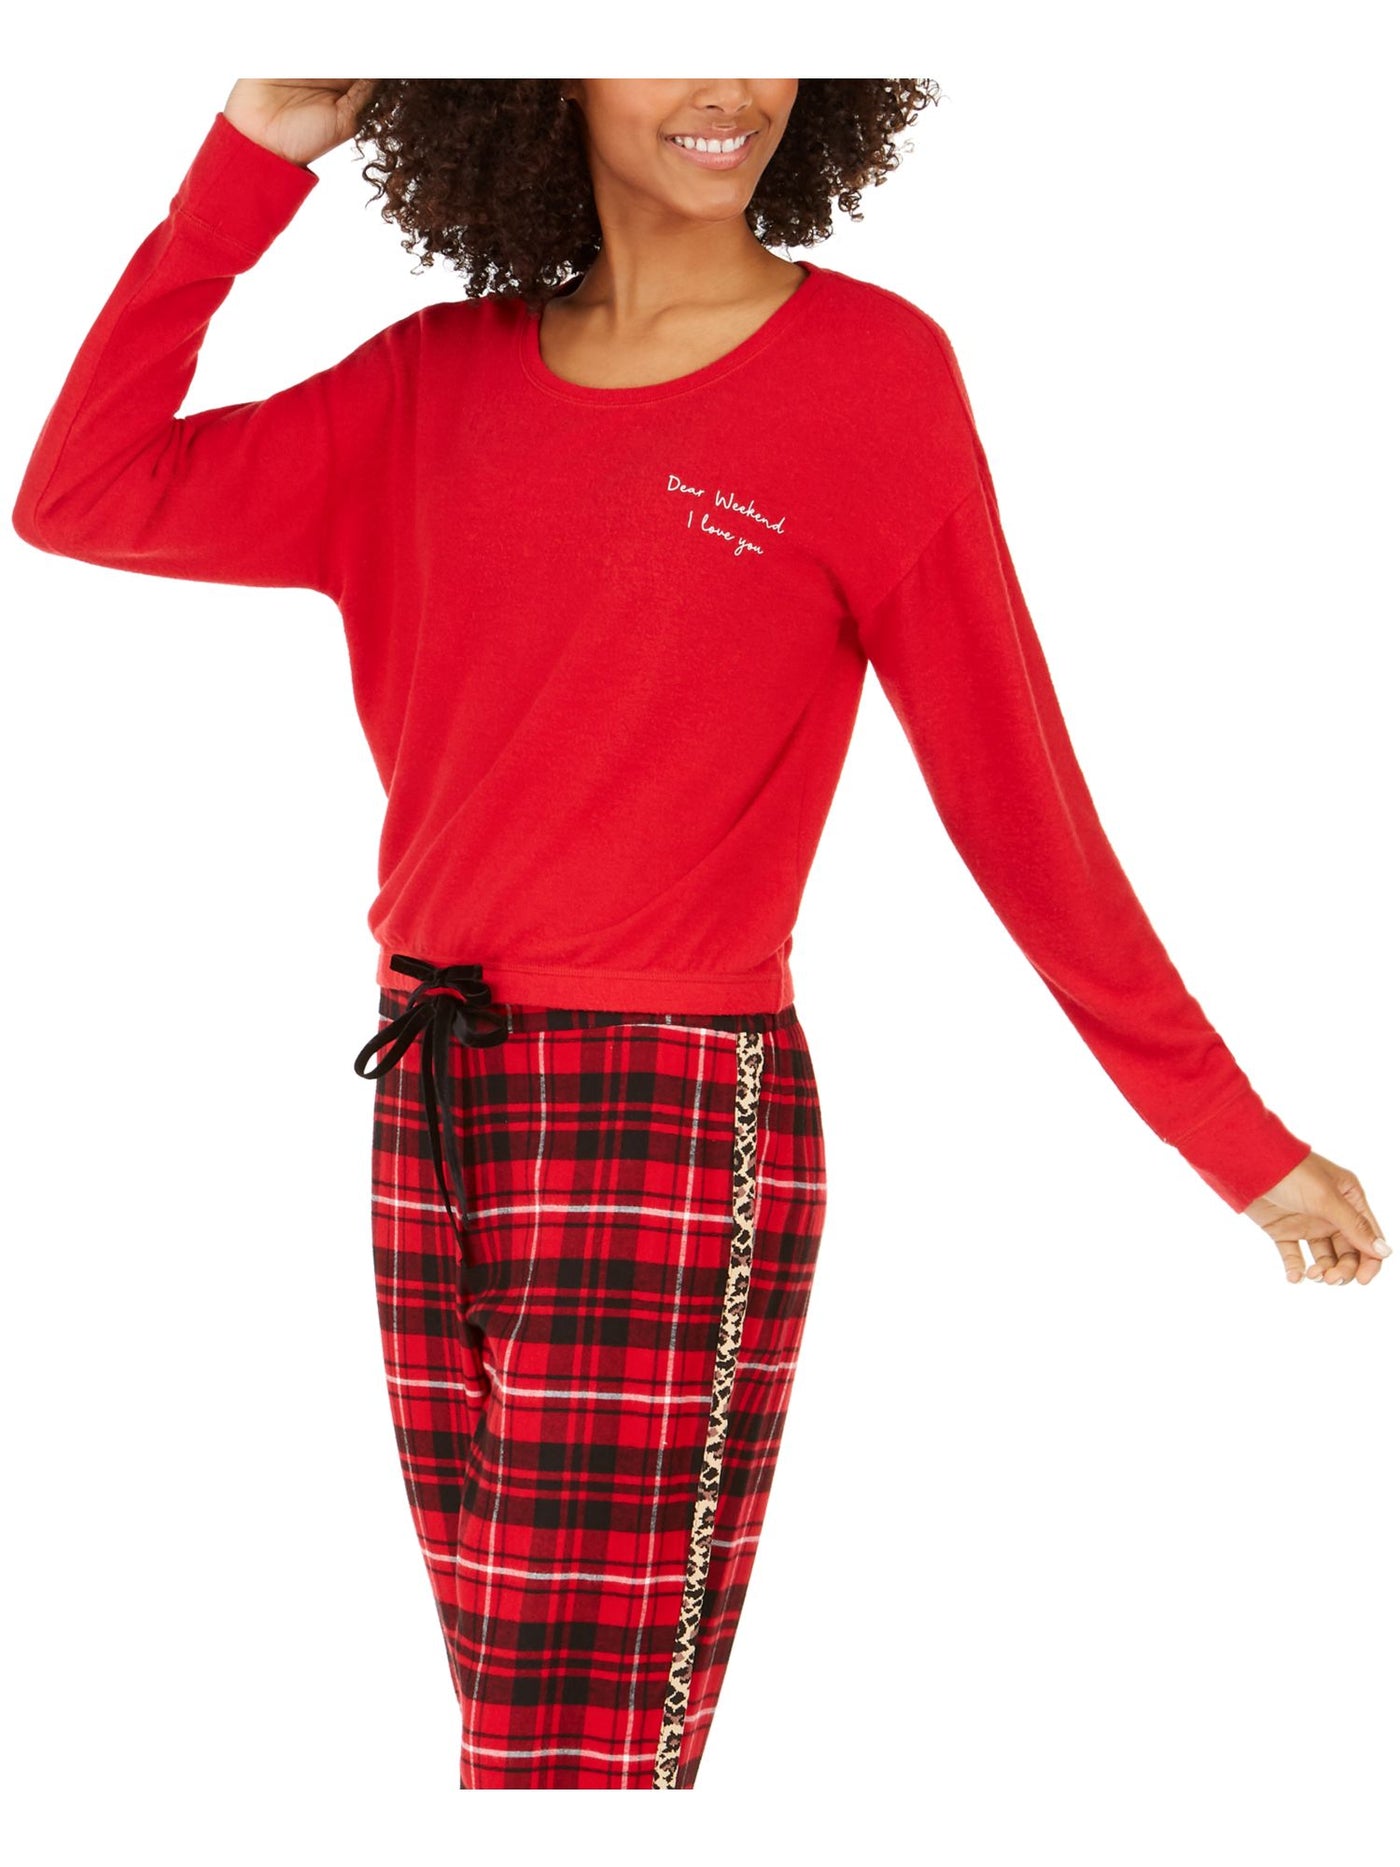 JENNI INTIMATES Intimates Red Sleep Shirt Pajama Top XS